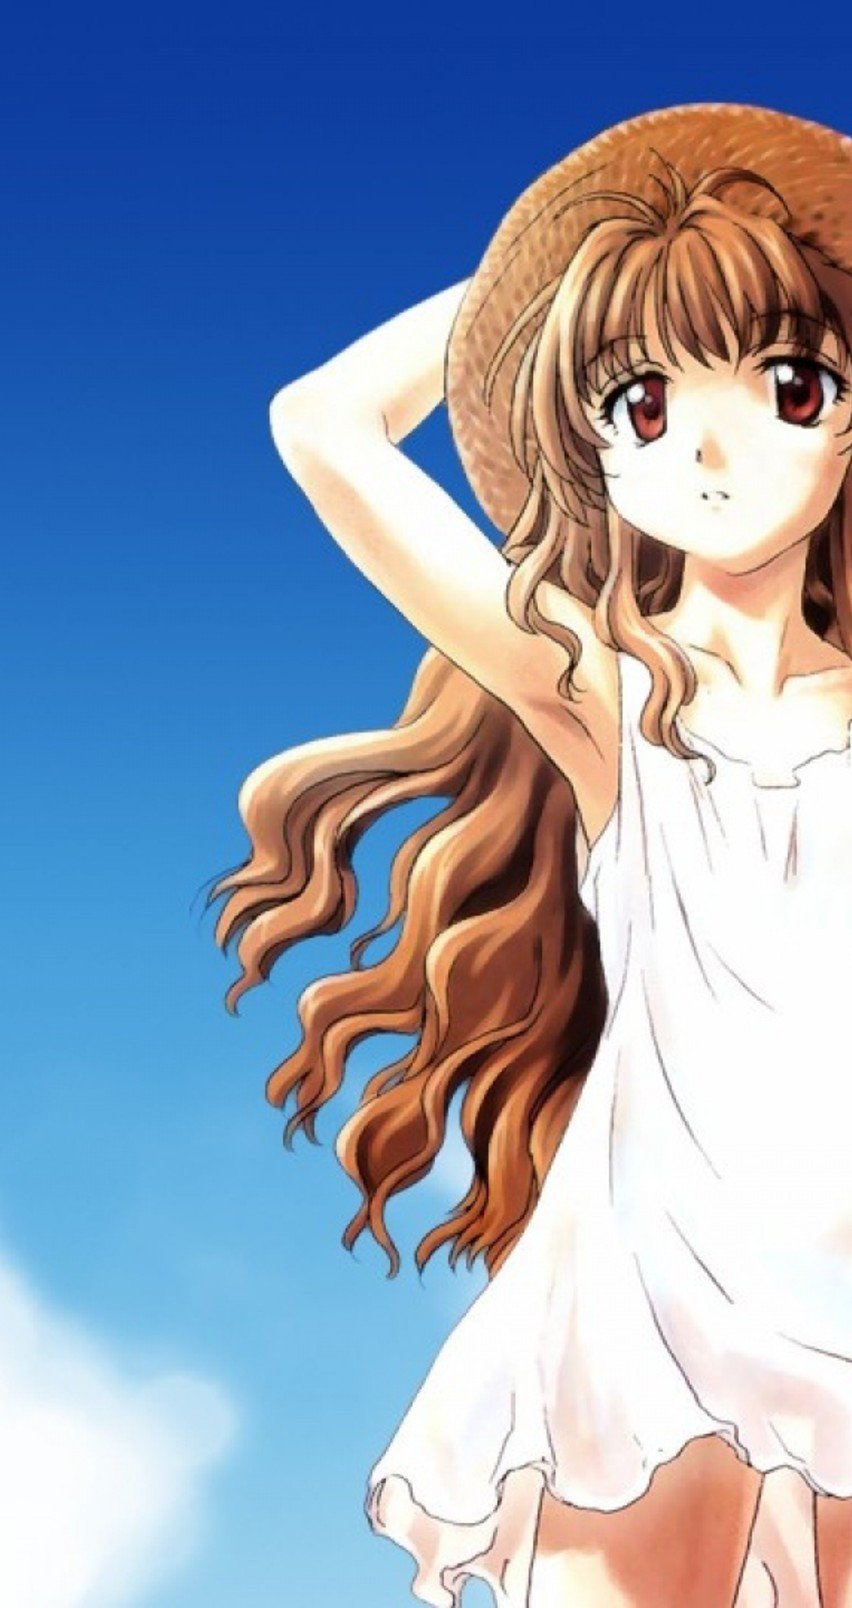 Free Download Beautiful Anime Girl In The Sun And Wind Hd